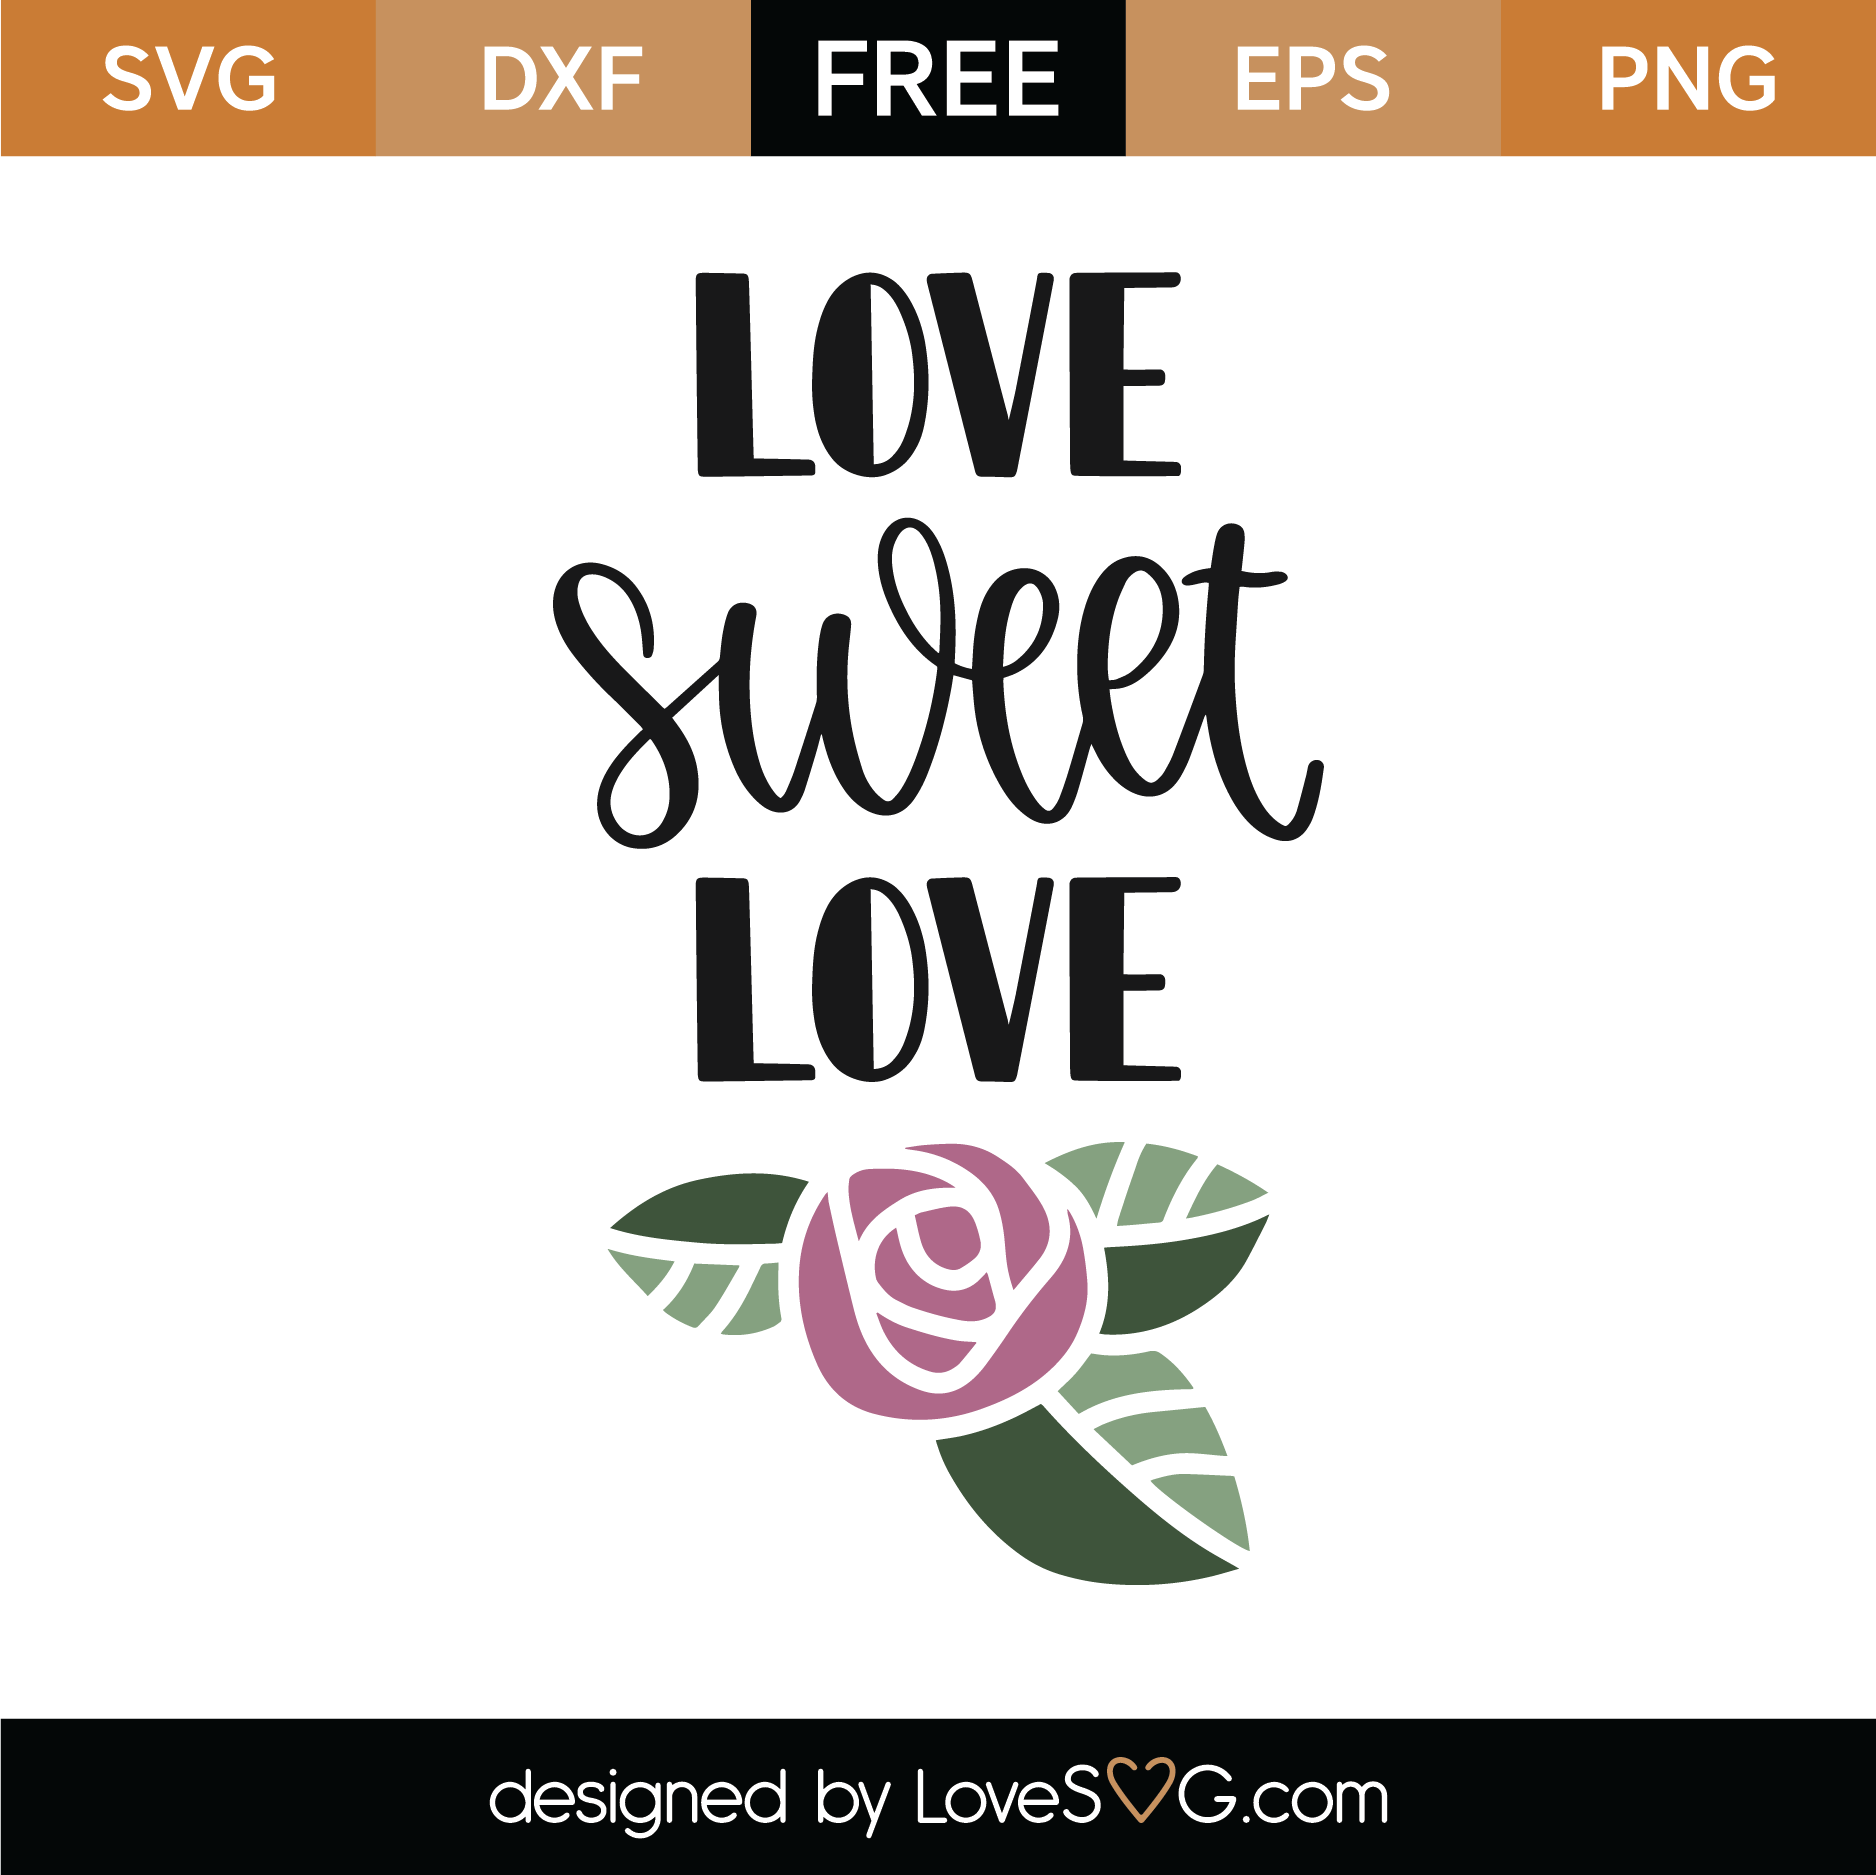 Download Free Love Sweet Love SVG Cut File | Lovesvg.com